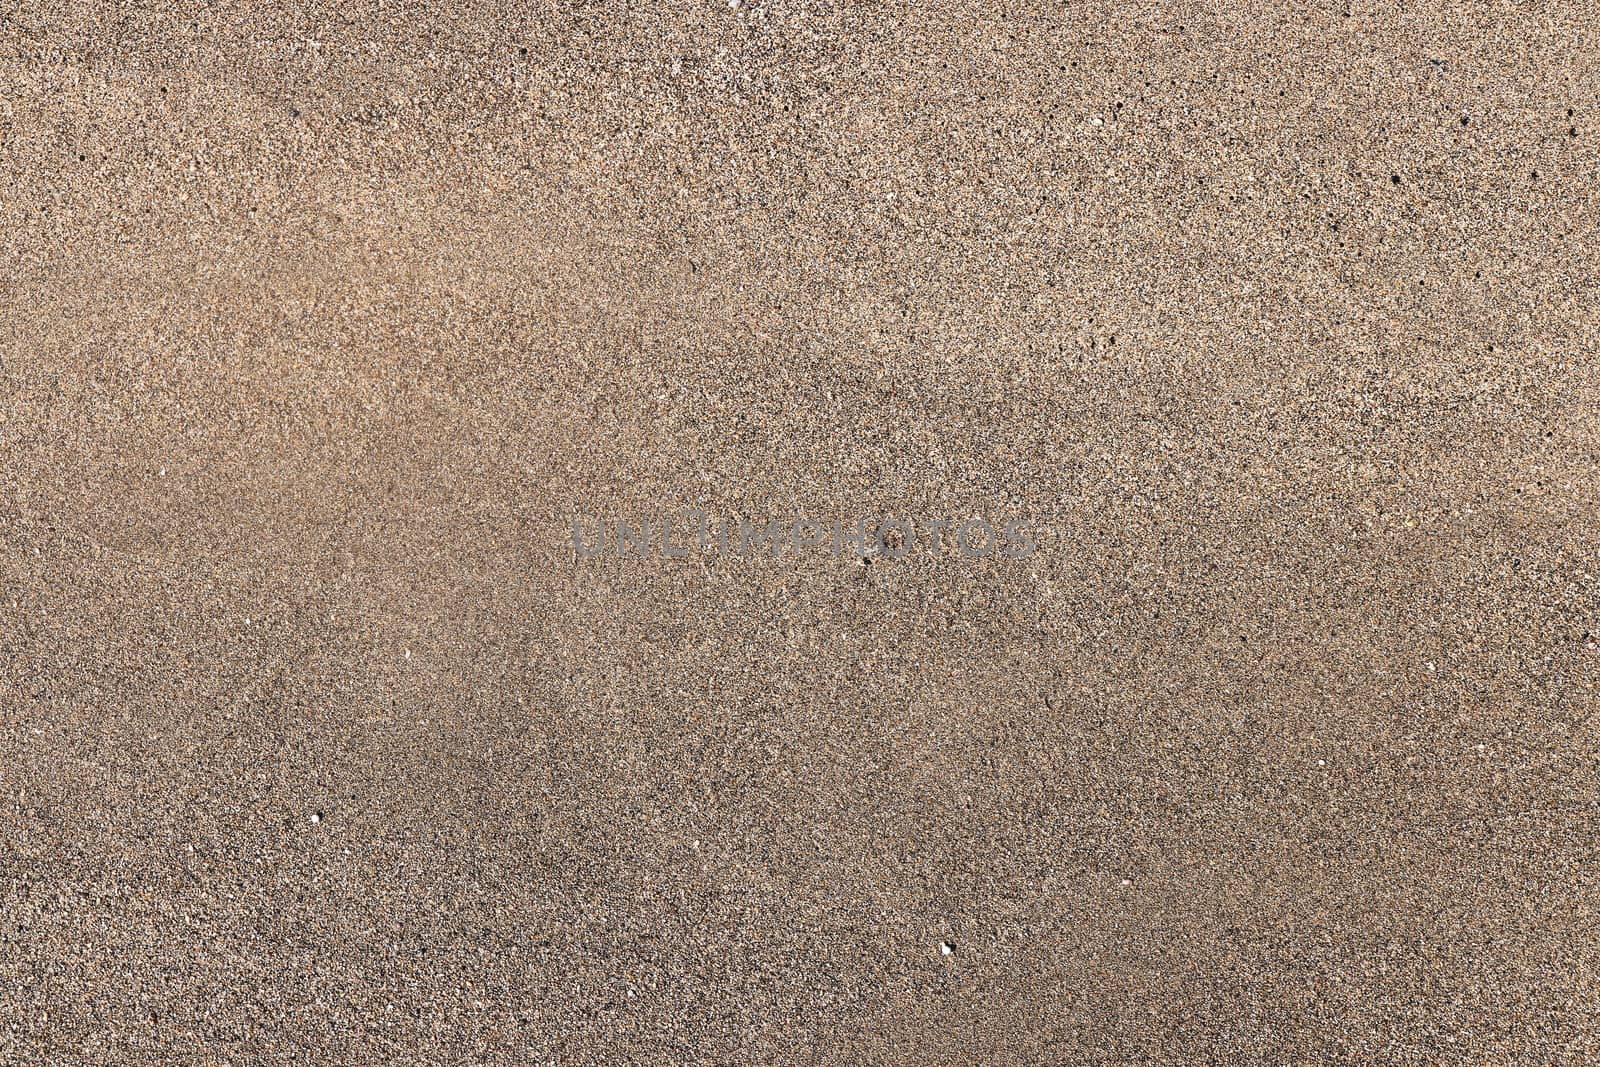 Sea Beach Sand Texture. Outdoor sand background. Sandy Surface Backdrop.